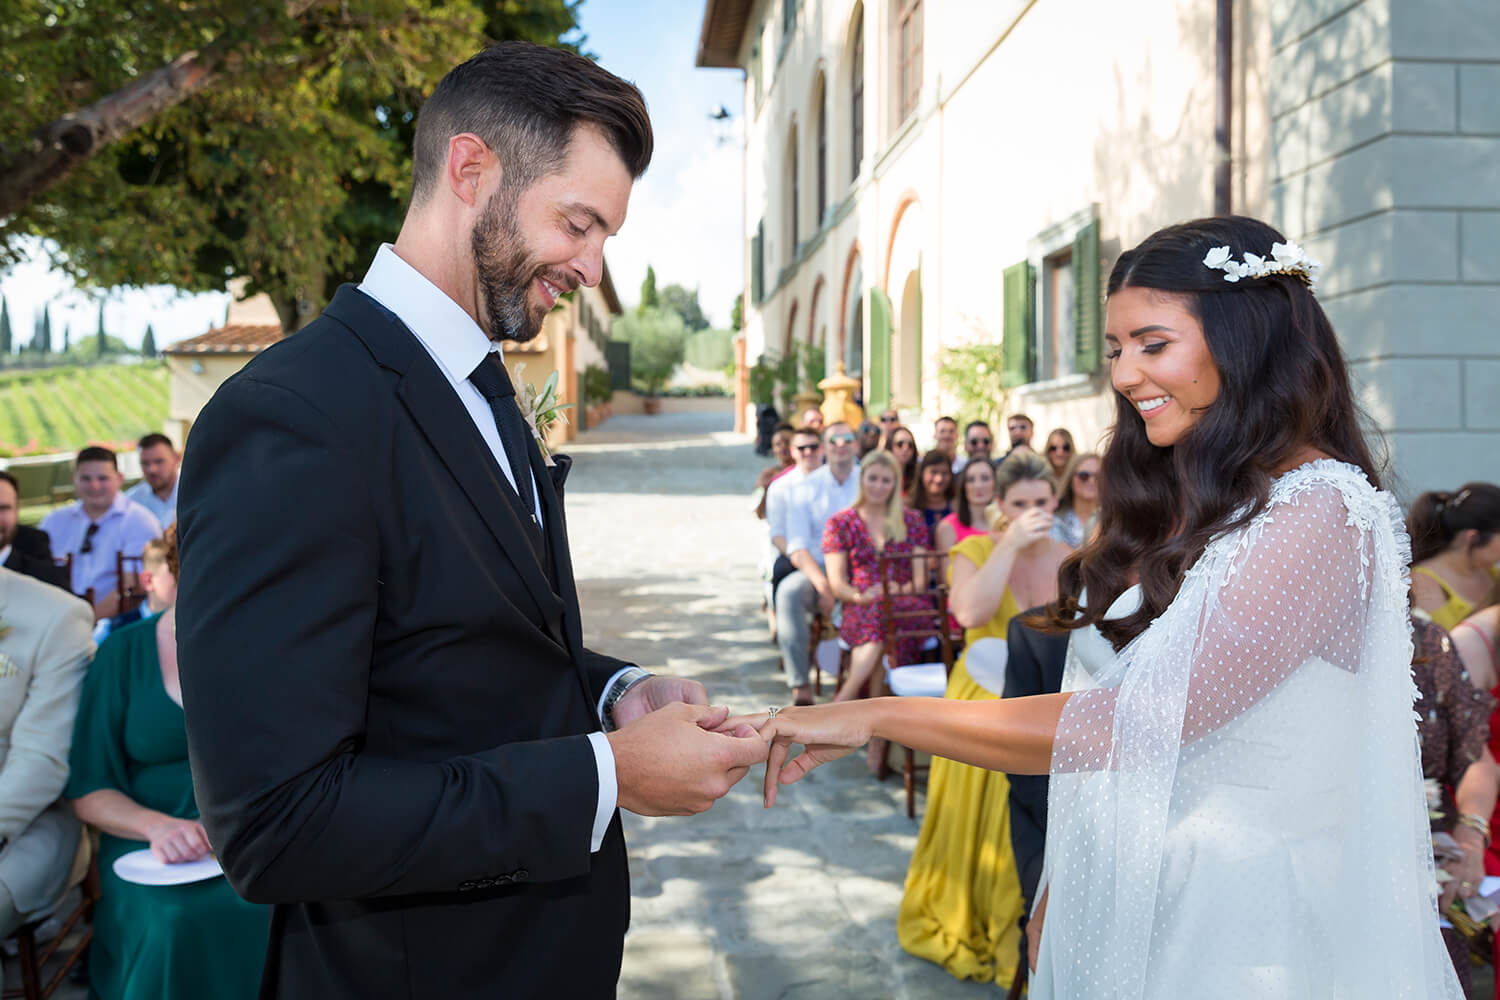 Wedding planner Toscana